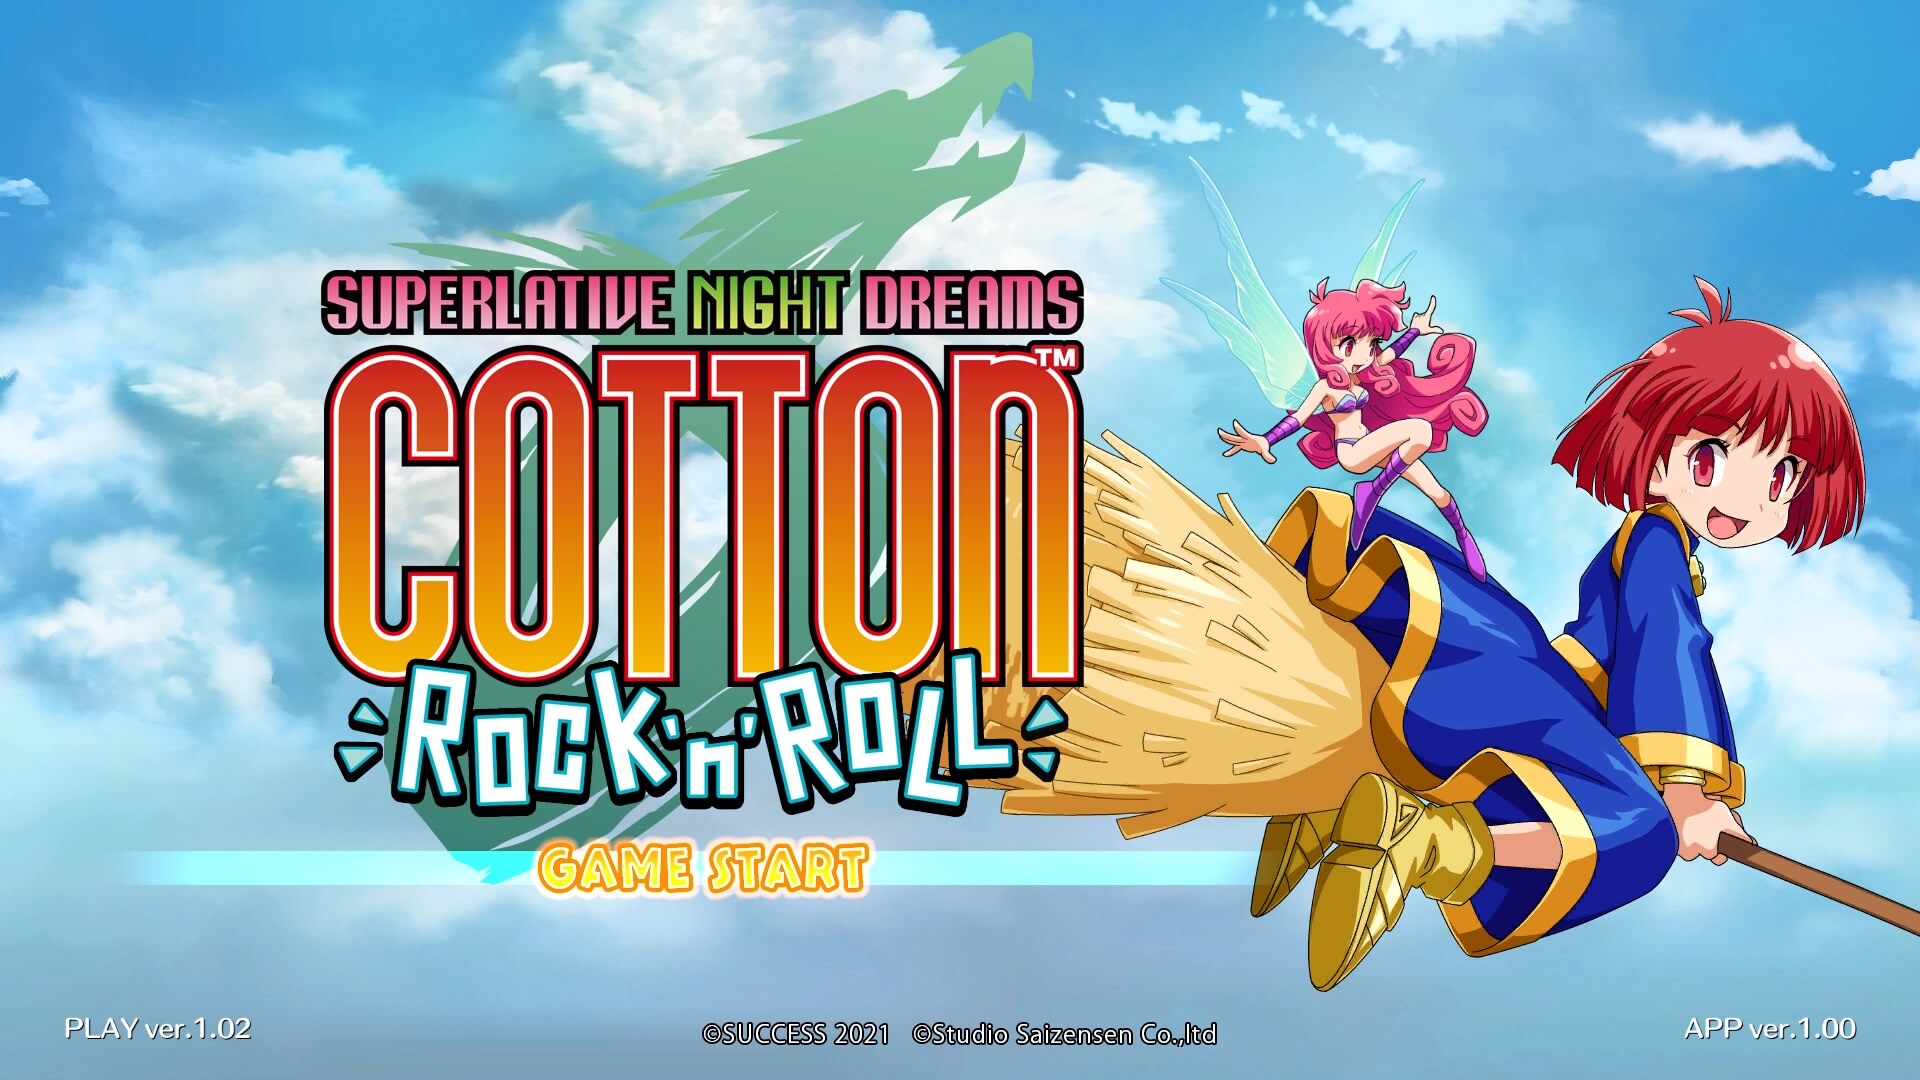 COTTOn Rock'n'Roll : SUPERLATIVE NIGHT DREAMS Steam CD Key 16.94 $